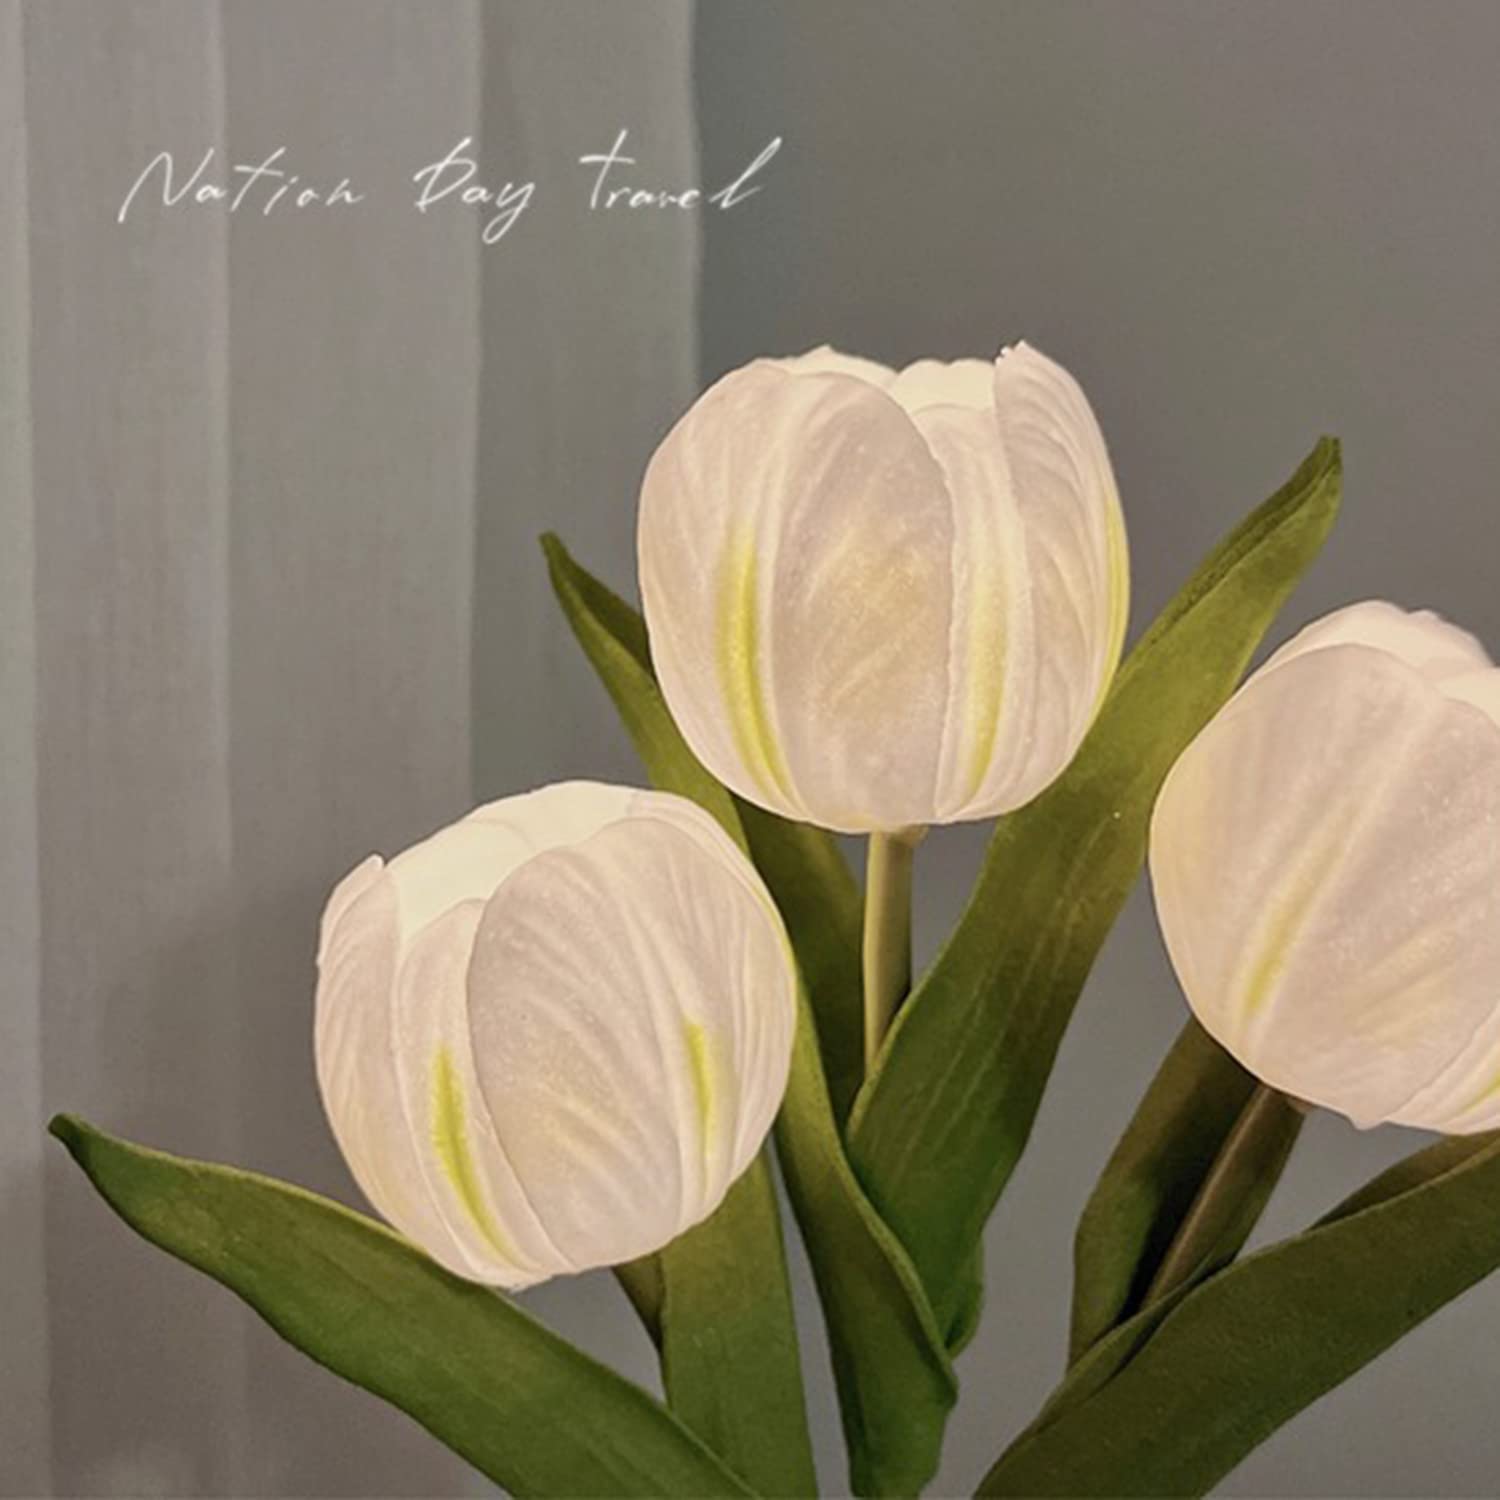 Lámpara de tulipán fotografías e imágenes de alta resolución - Alamy